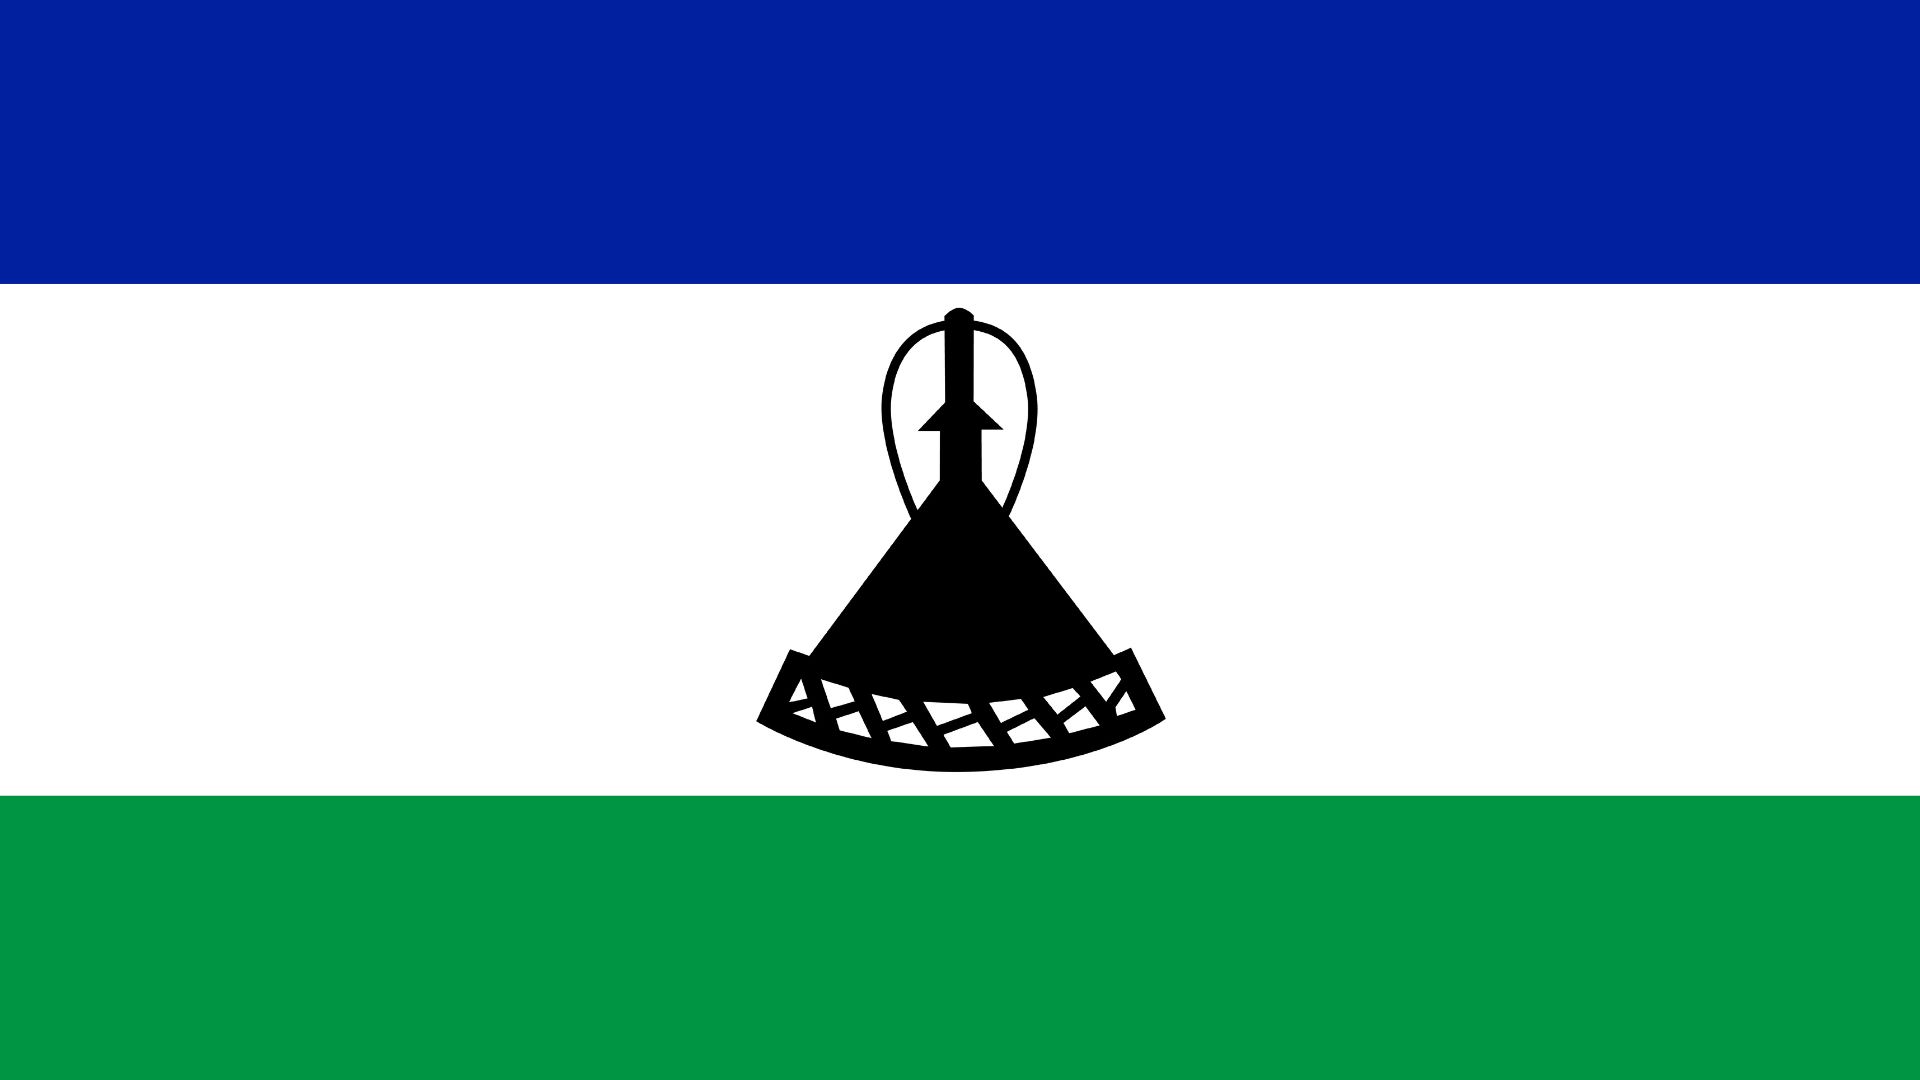 A bandeira de Lesoto possui como características as cores azul, branco e verde divididas horizontalmente com o chapéu negro do partido Basotho no centro.